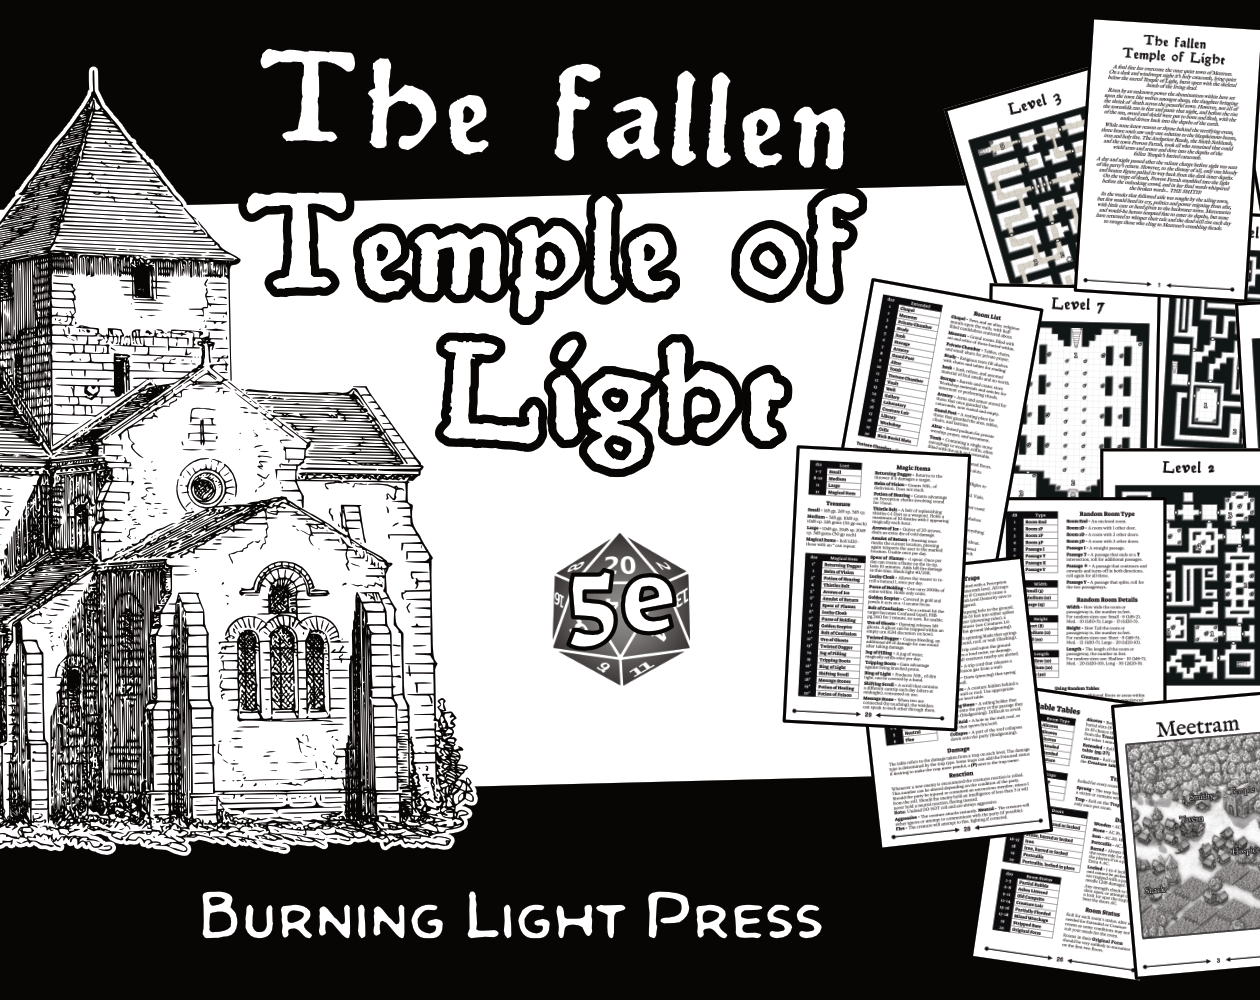 The Fallen Temple of Light